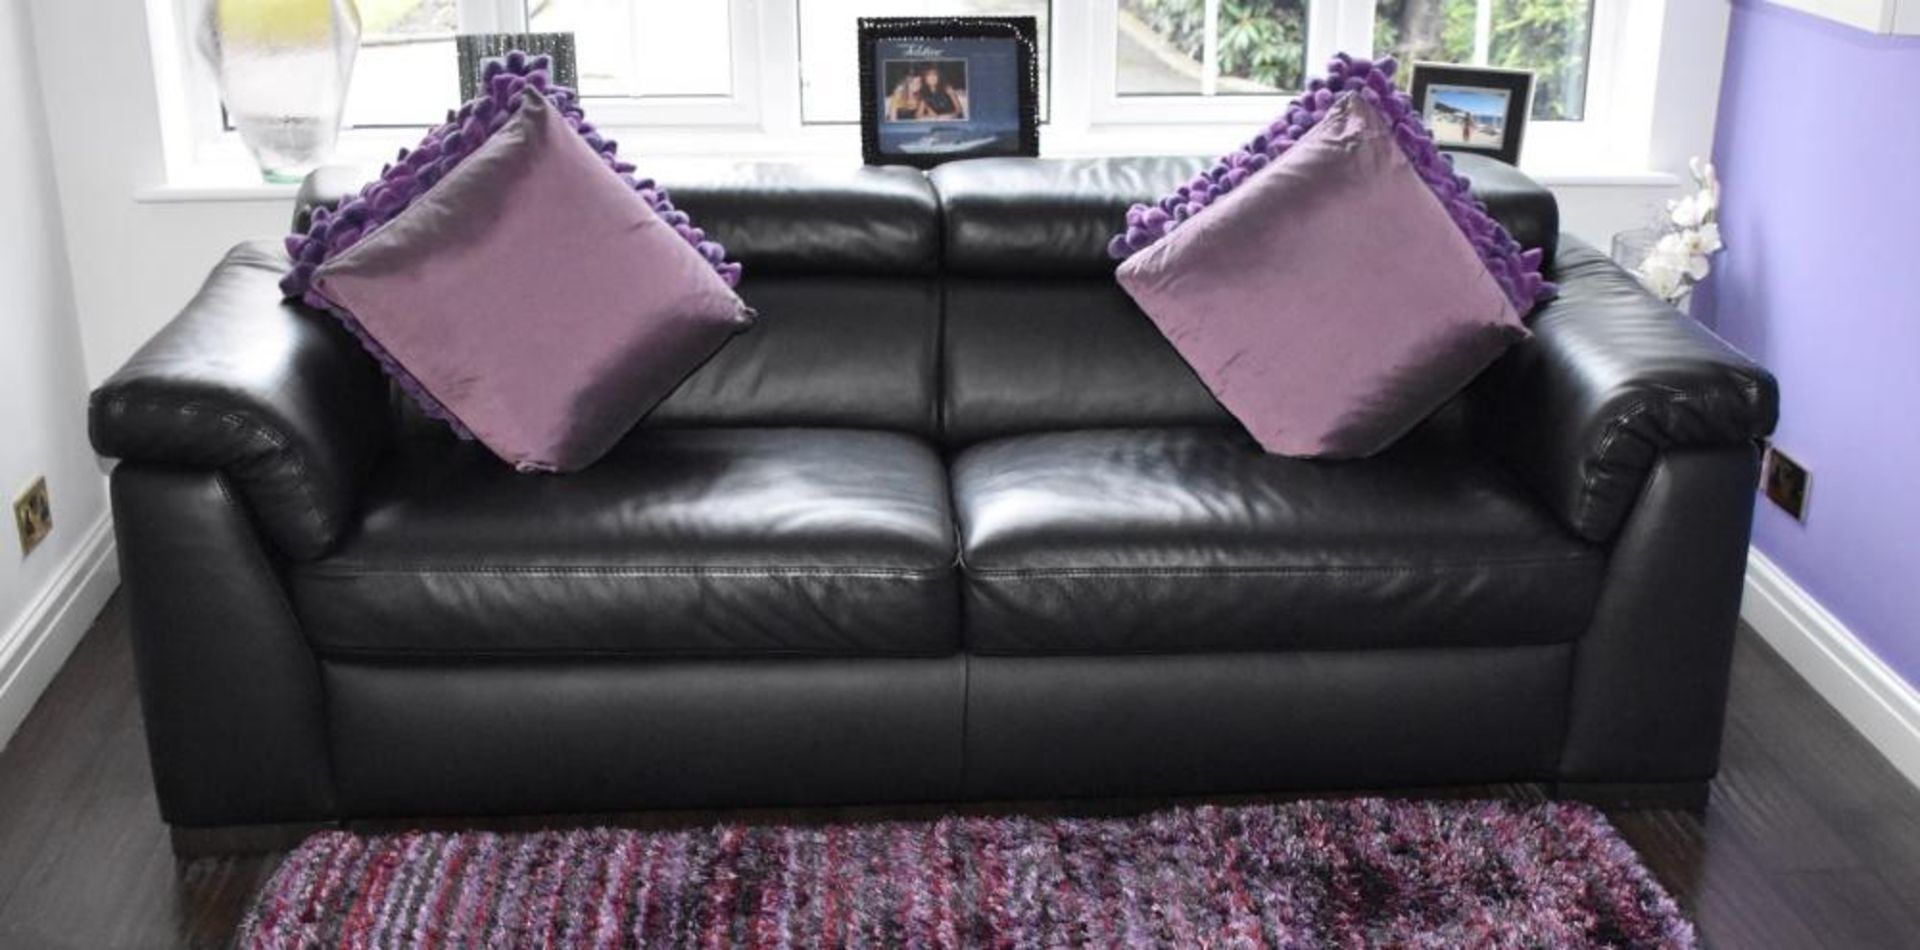 1 x Italsofa by Natuzzi Black Leather Sofa with 2 Purple DreamWeavers Cushions - CL469 - No VAT